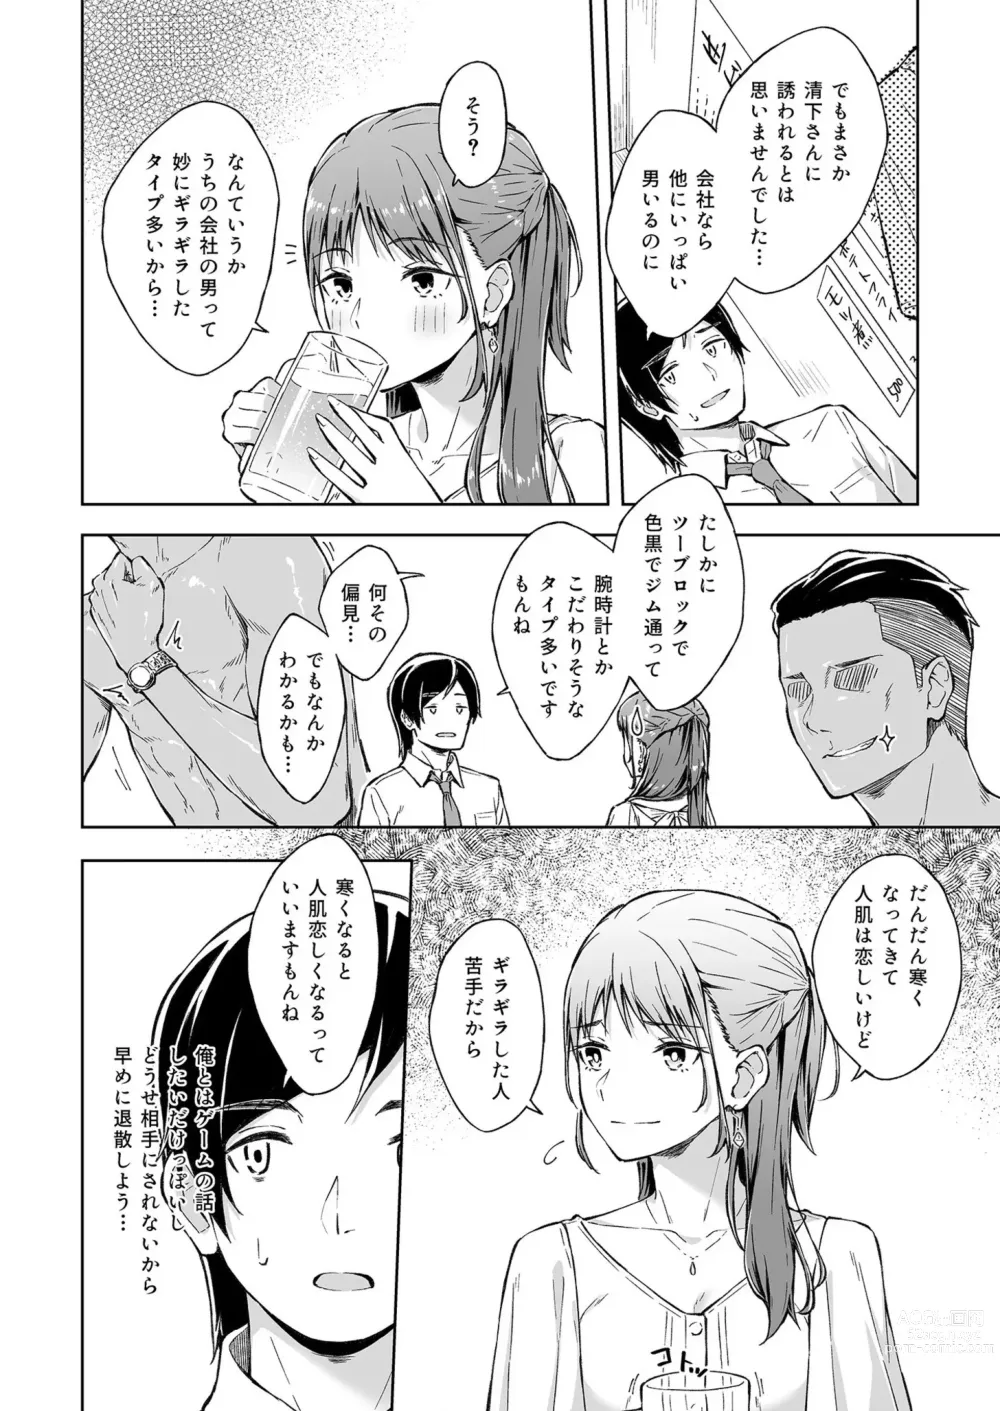 Page 6 of manga Hitohada Friend 1-3